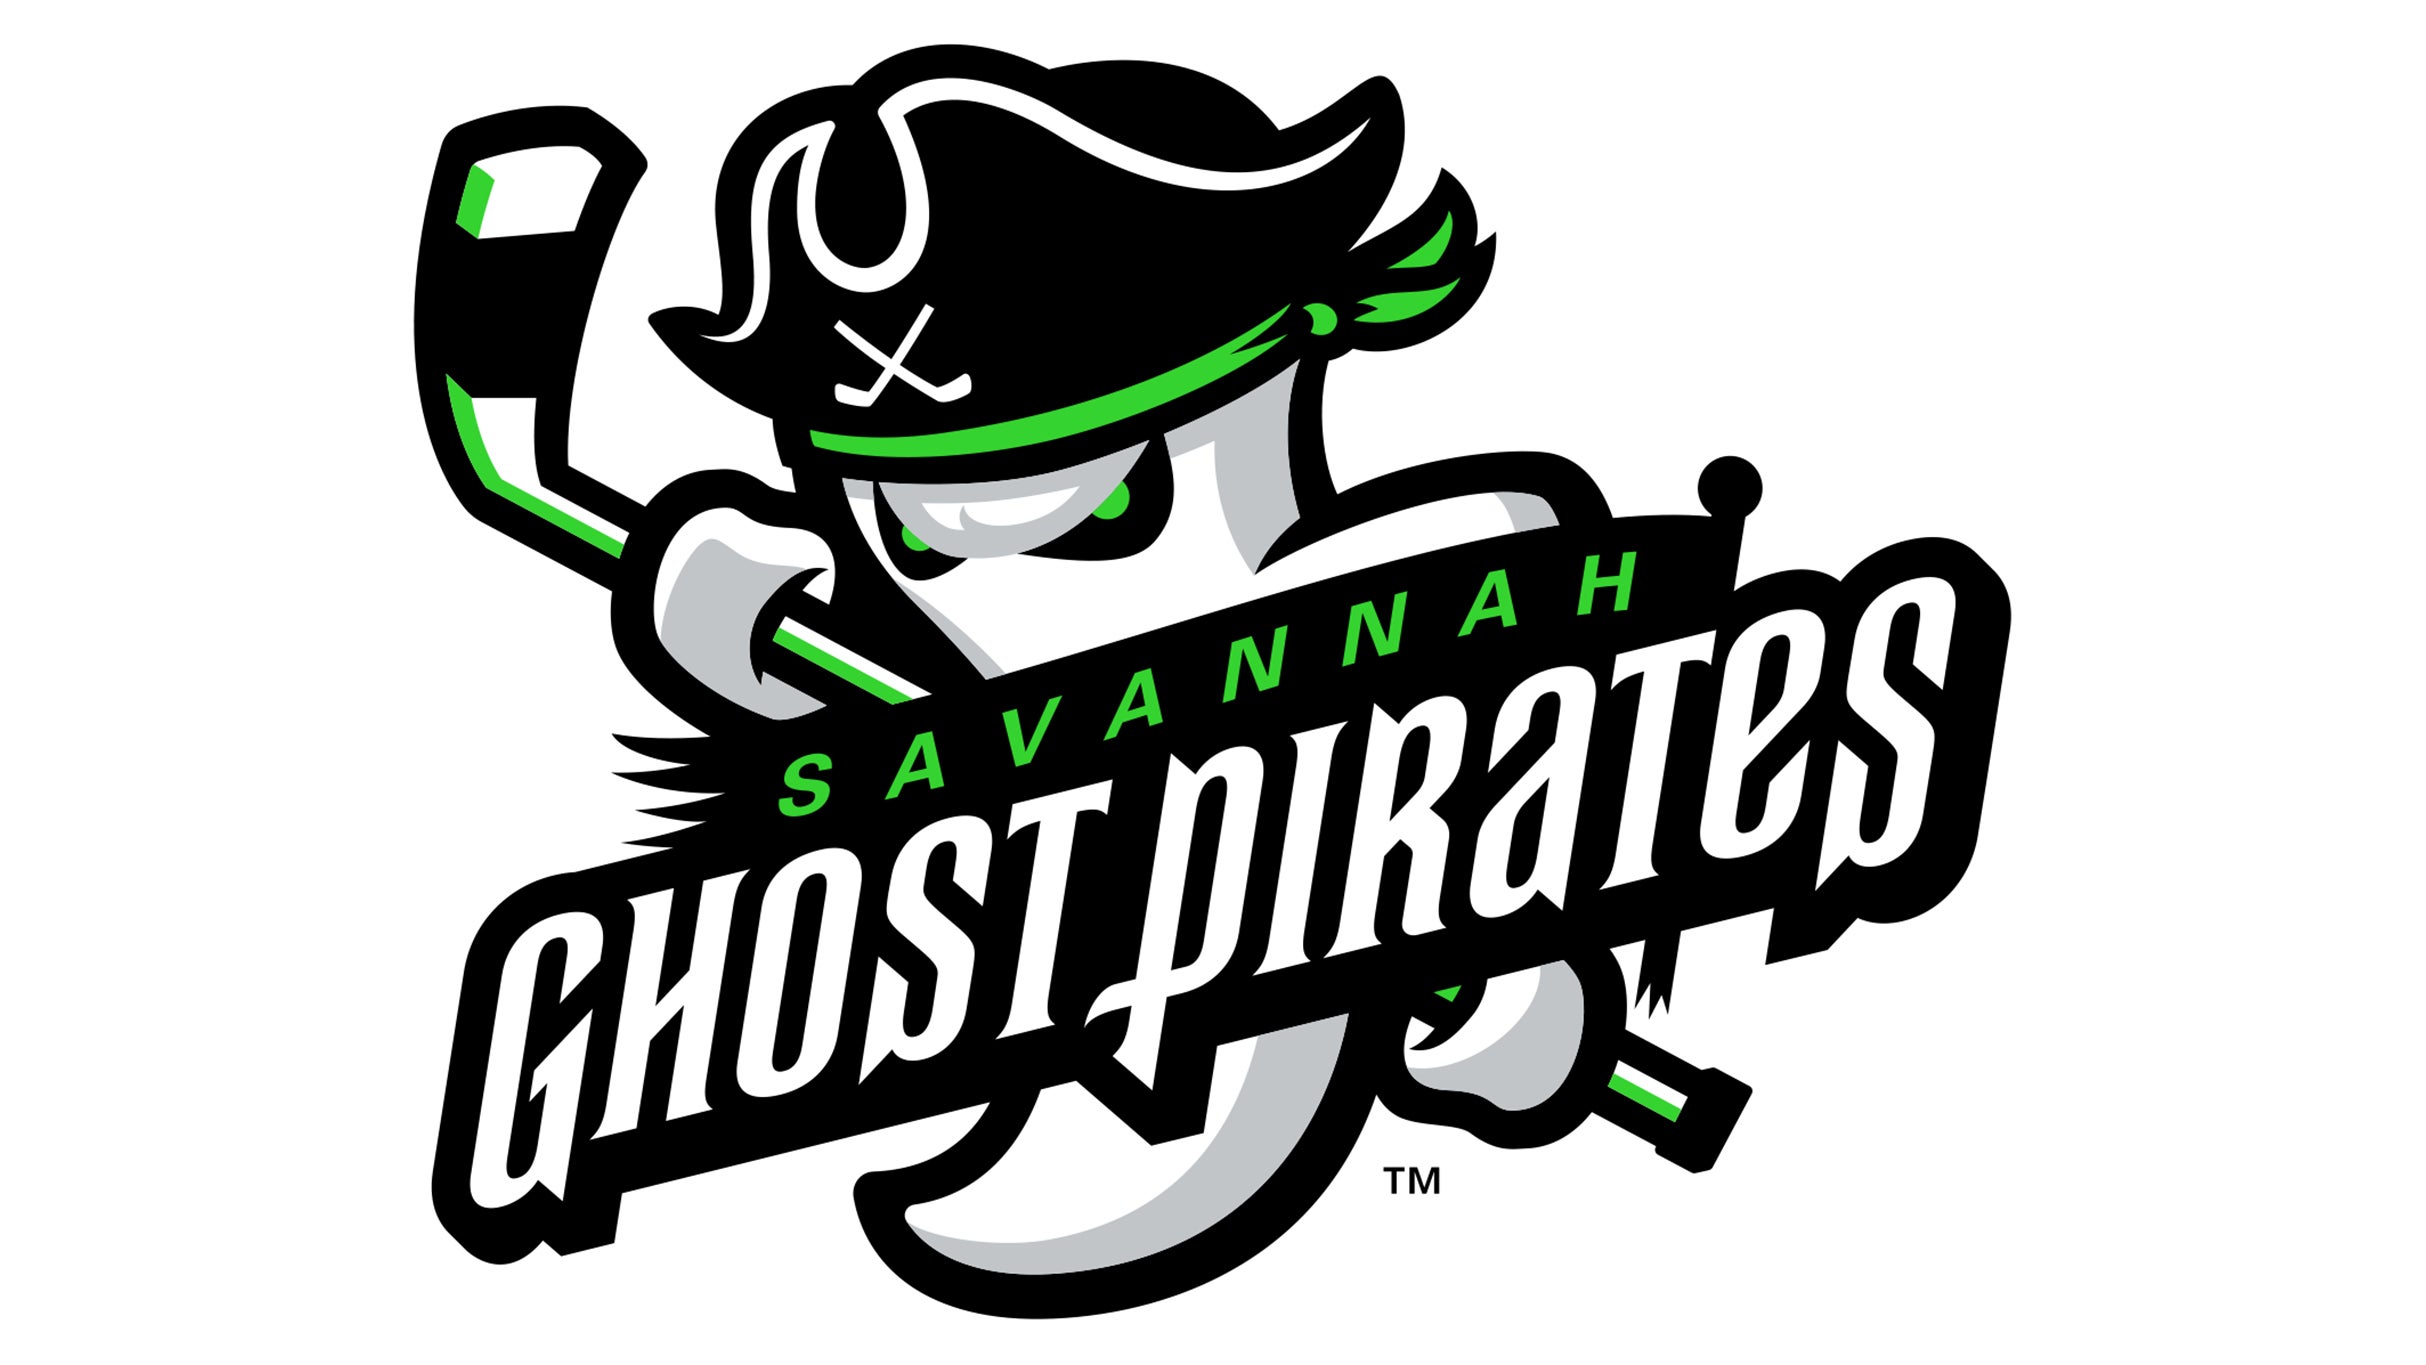 Ghost Pirates Home Opener - Enmarket Arena